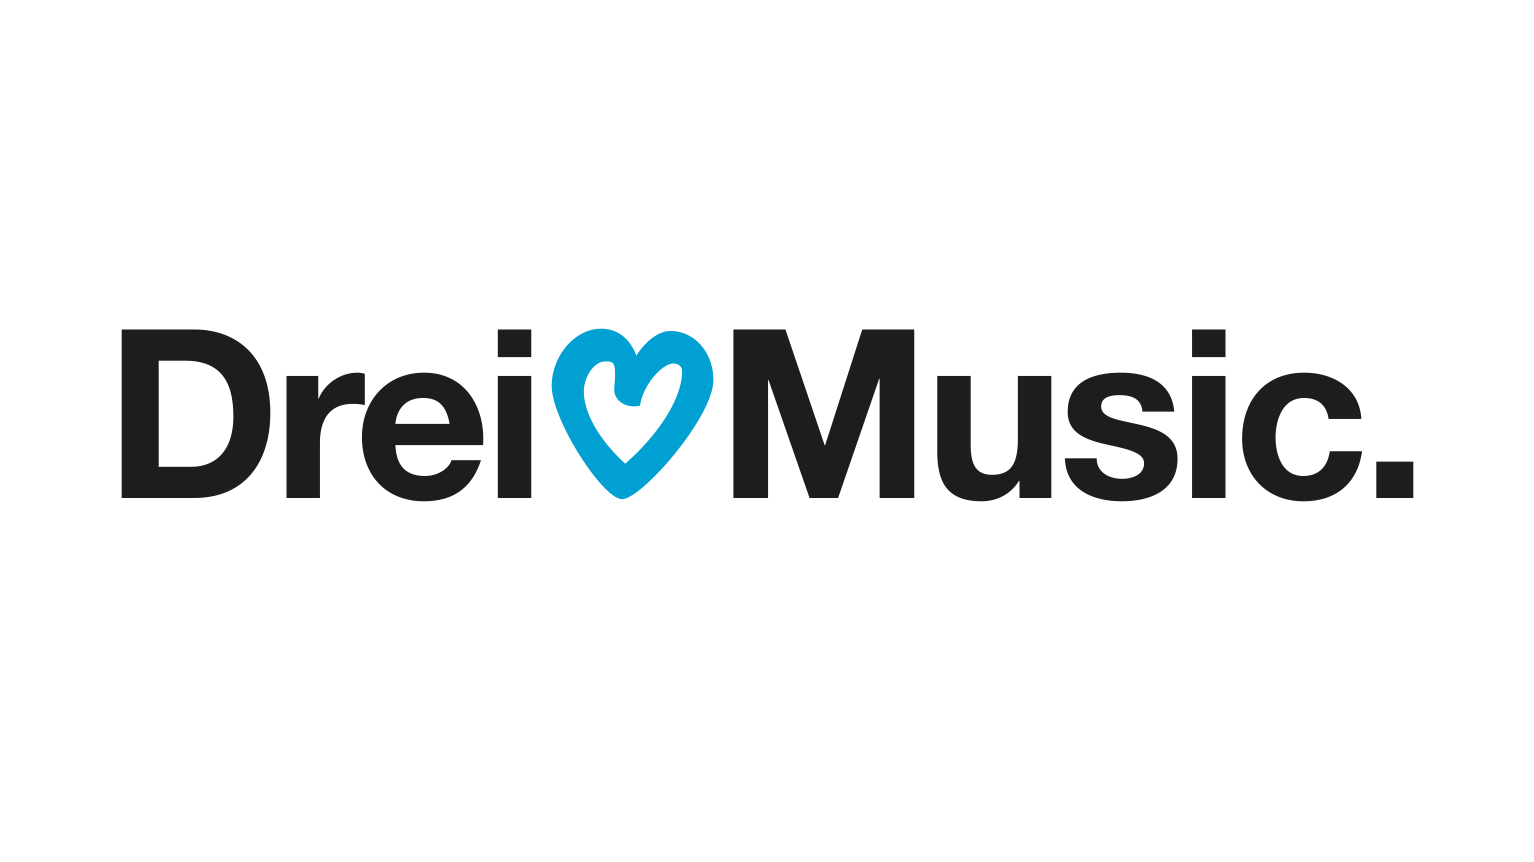 https://www.drei.at/media/common/info/amazon-music/drei-loves-music-logo-neu.png